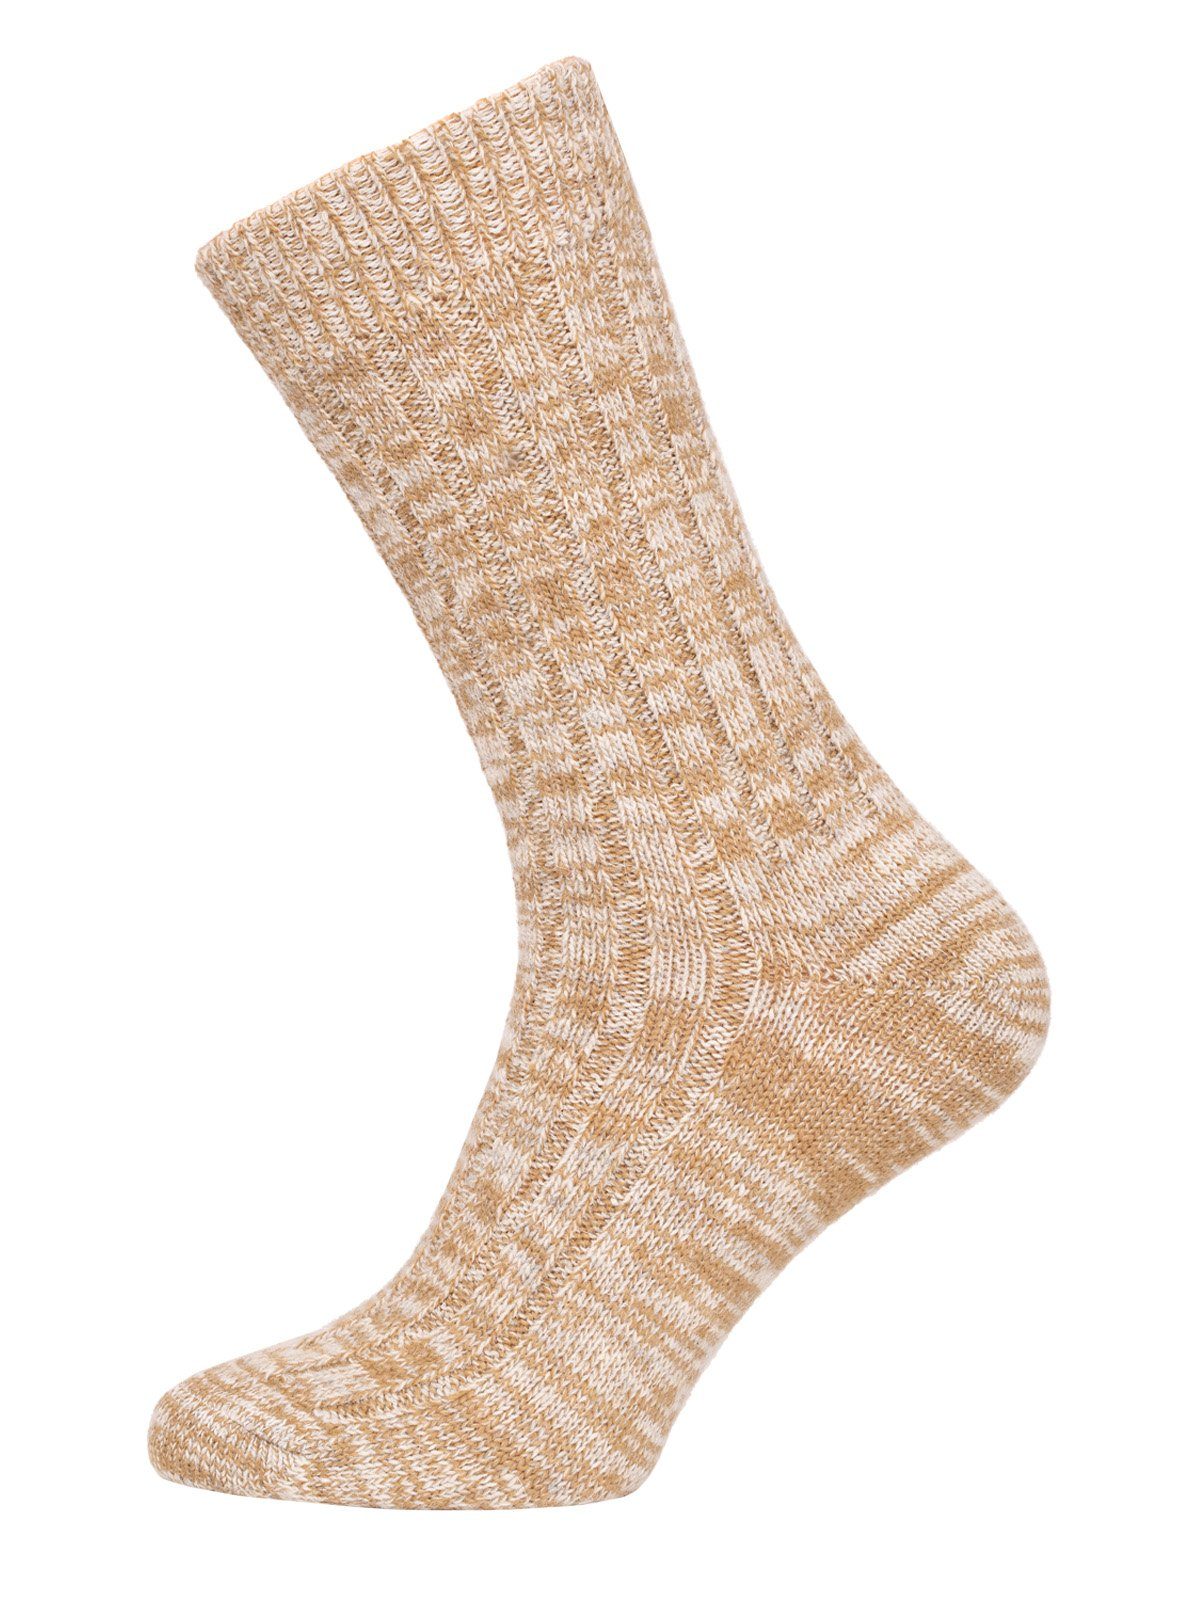 Wollanteil Wollsocken (Schurwolle) 75% warme Socken Wollsocken (Paar, 1 Dünne aus HomeOfSocks Camel Melierte 75% und mit Wolle Paar)